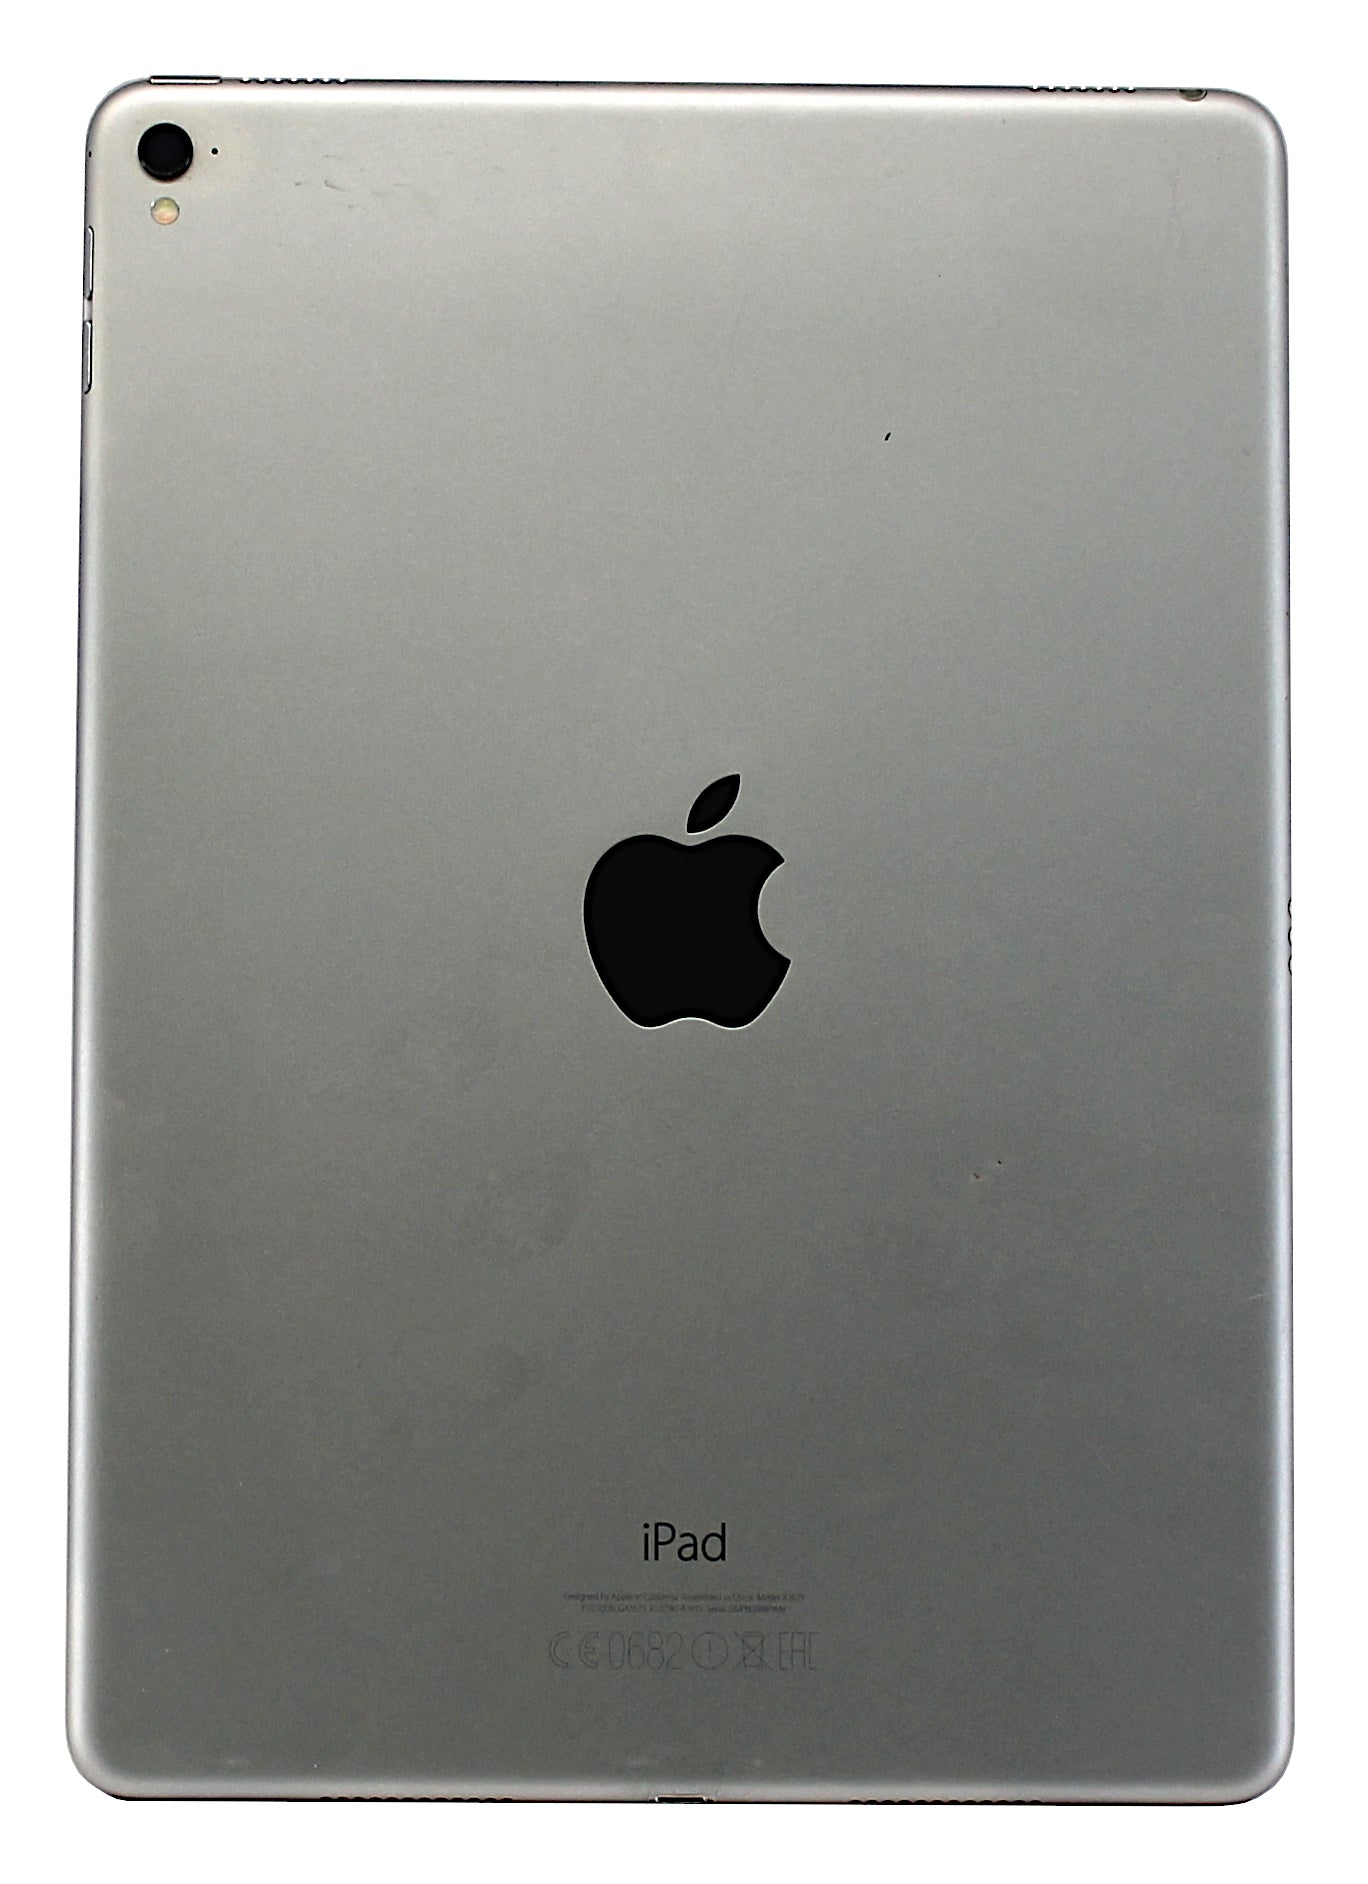 Apple iPad Pro Tablet, 9.7", 256GB, WiFi, Space Grey, A1673